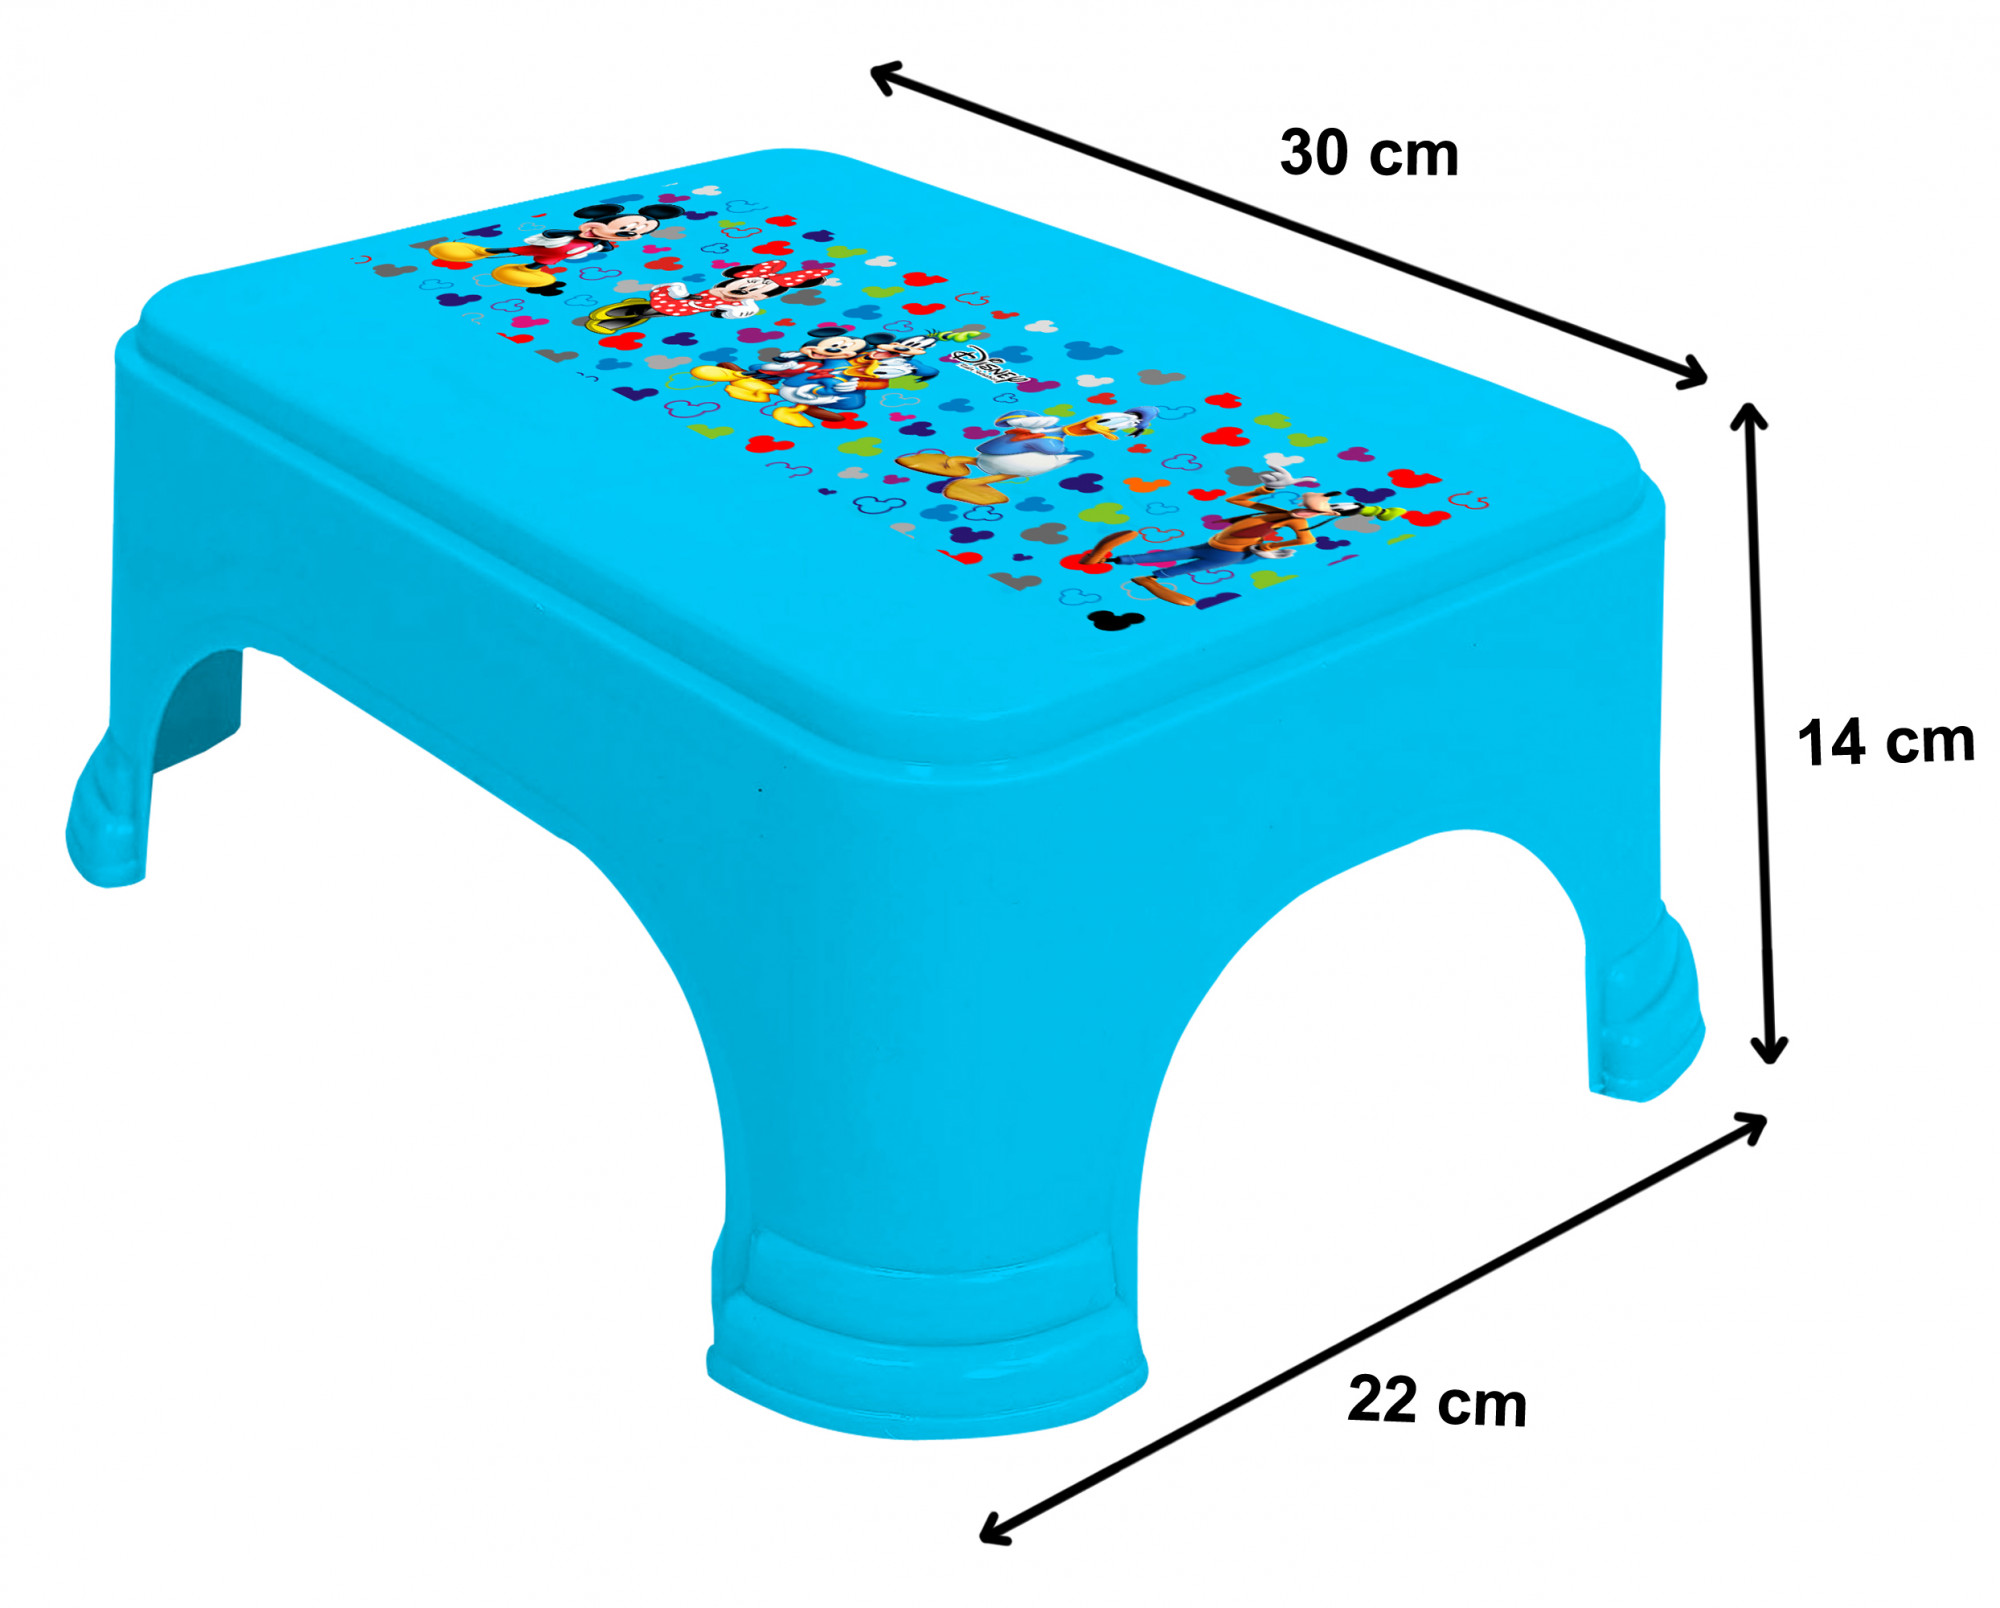 Kuber Industries Disney Team Mickey Print Square Plastic Bathroom Stool (Blue) -HS_35_KUBMART17265